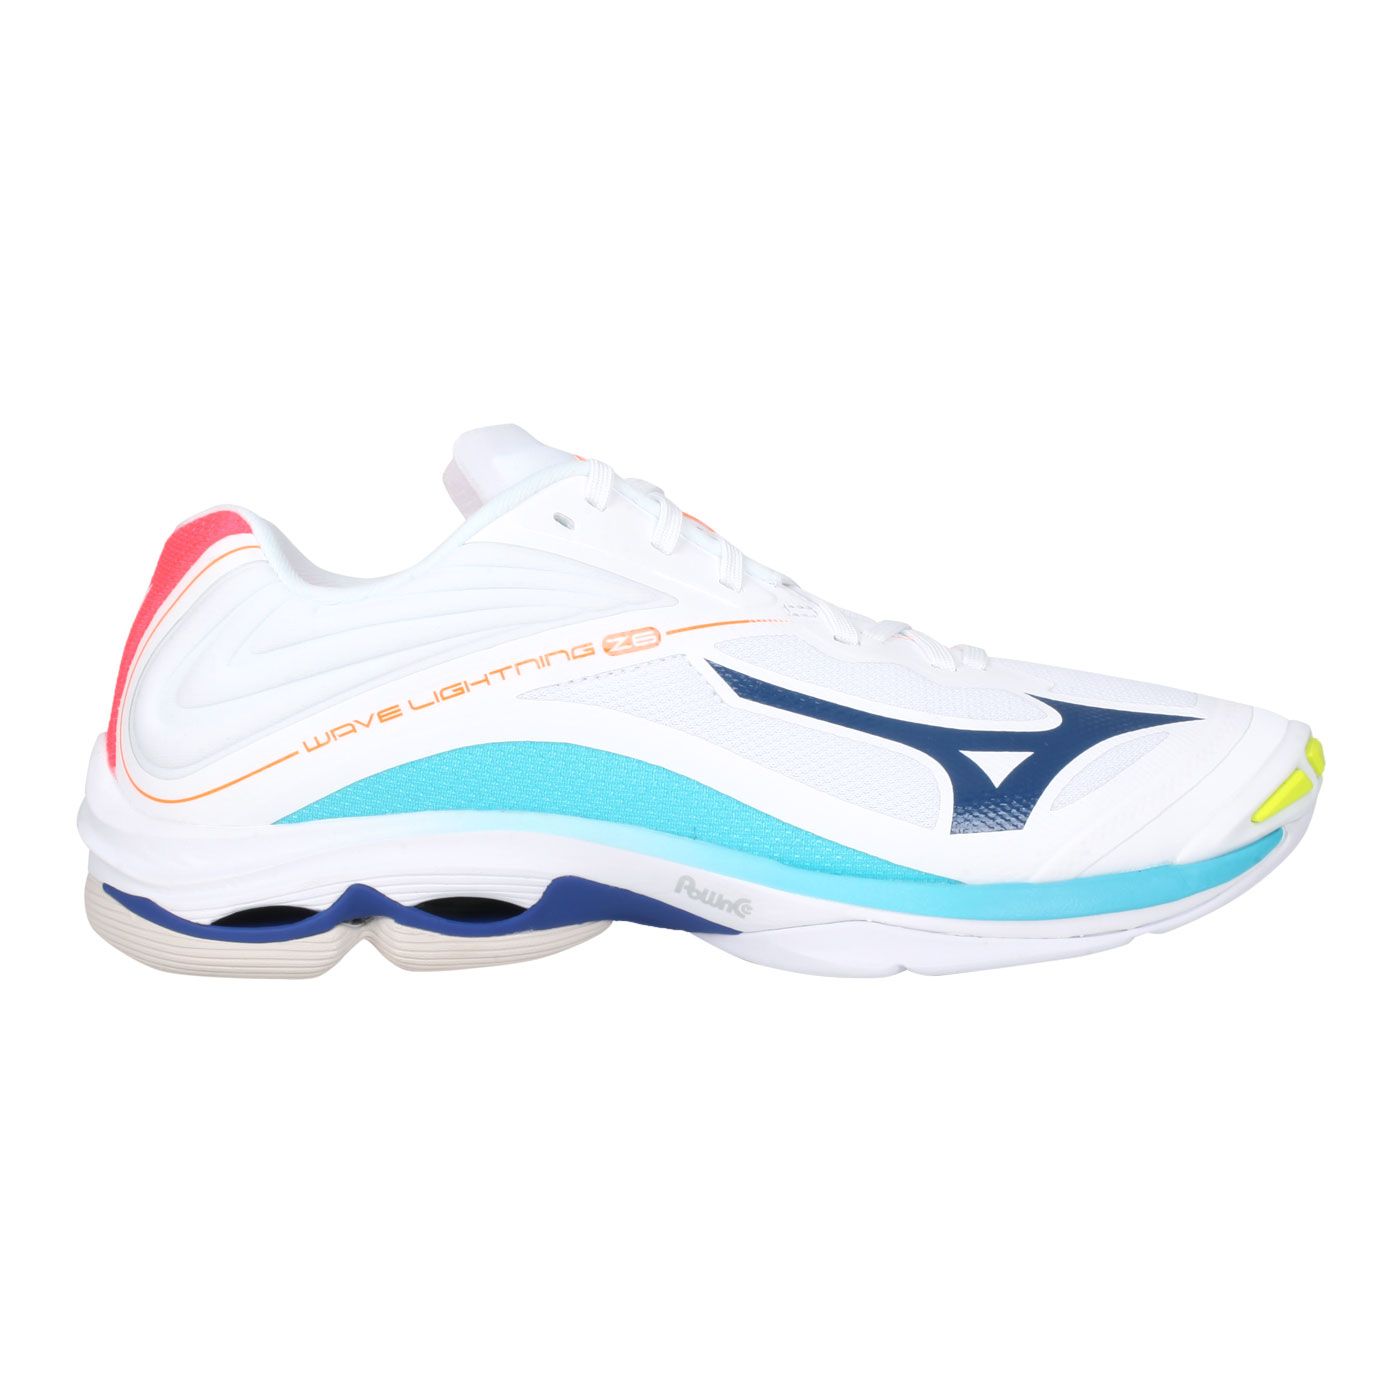 MIZUNO 排球鞋  @WAVE LIGHTNING Z6@V1GA200114 - 白藍橘亮粉